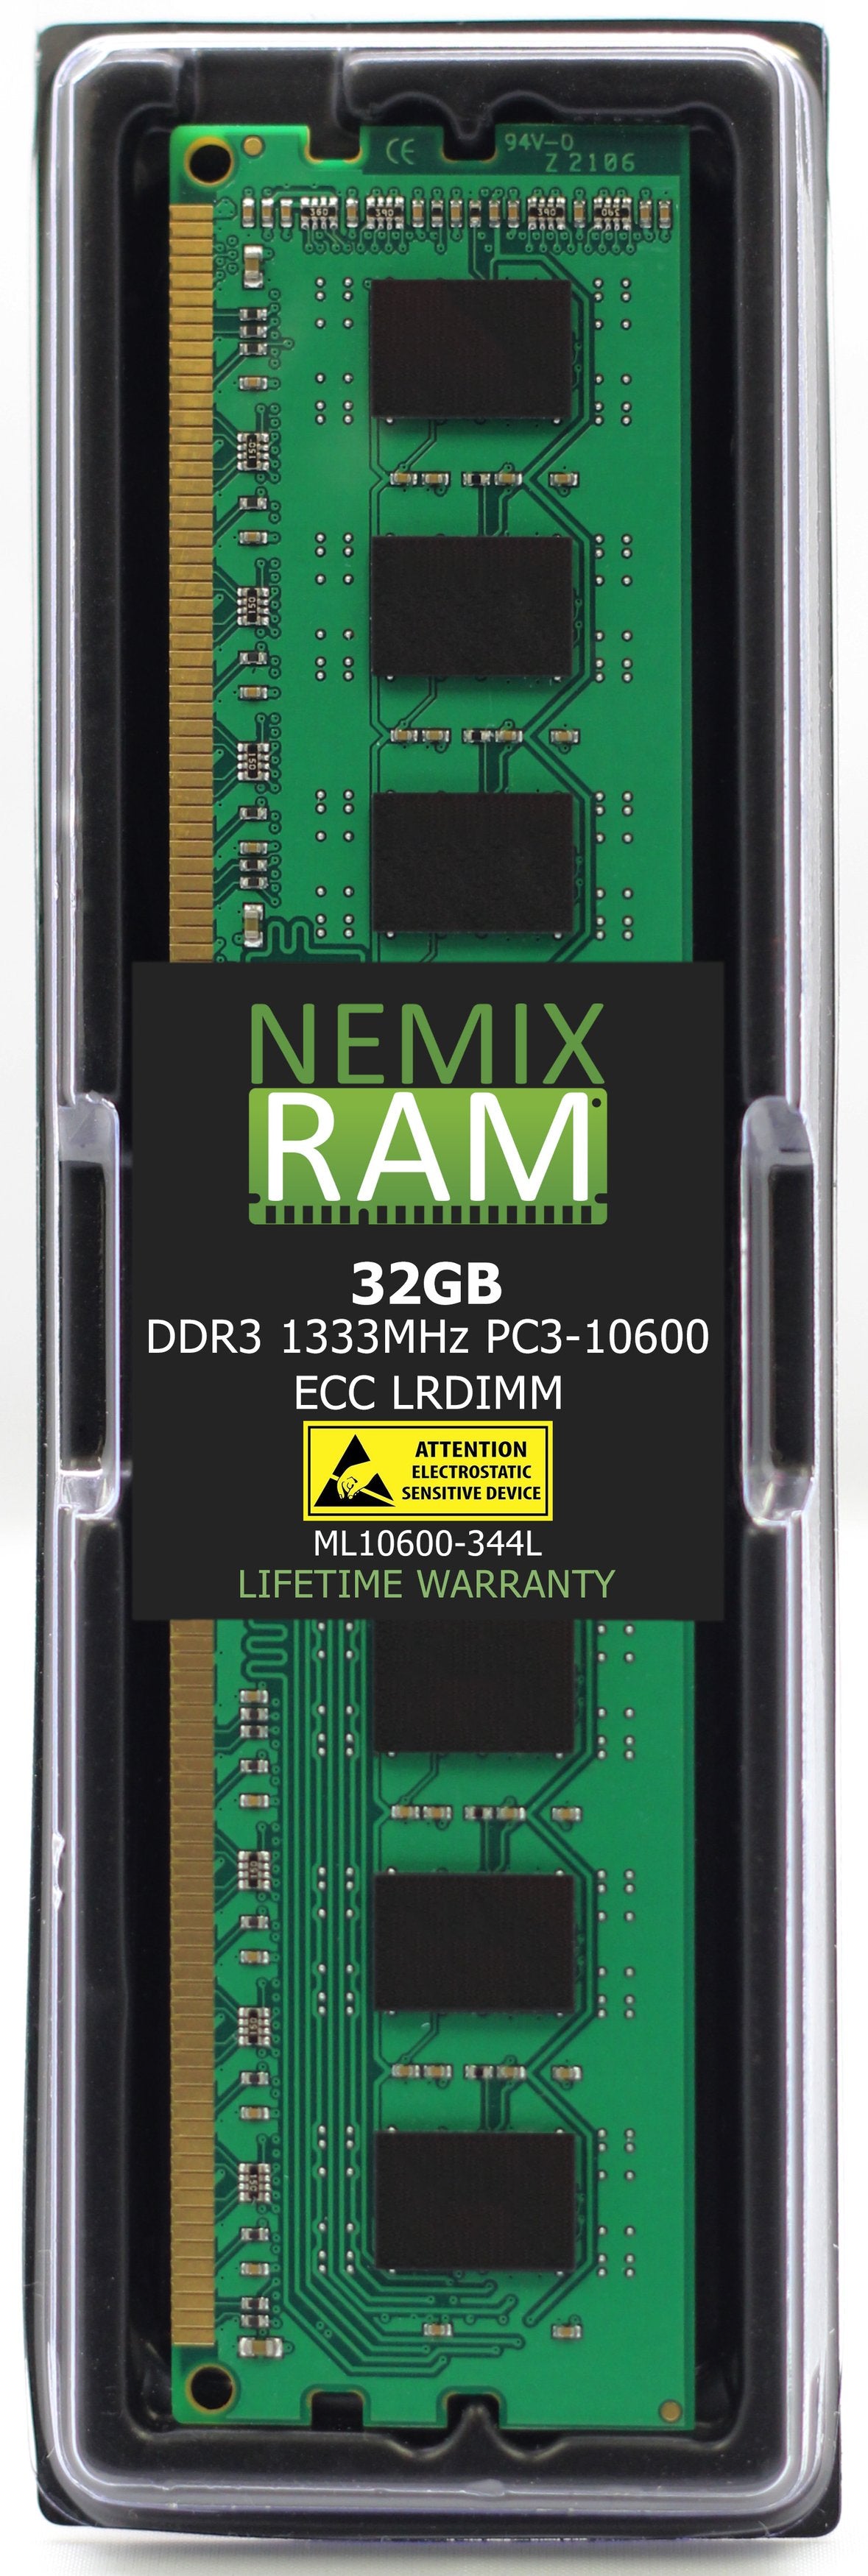 Hynix HMT84GL7MMR4A-H9 32GB DDR3 1333MHZ PC3-10600 LRDIMM Compatible Memory Module